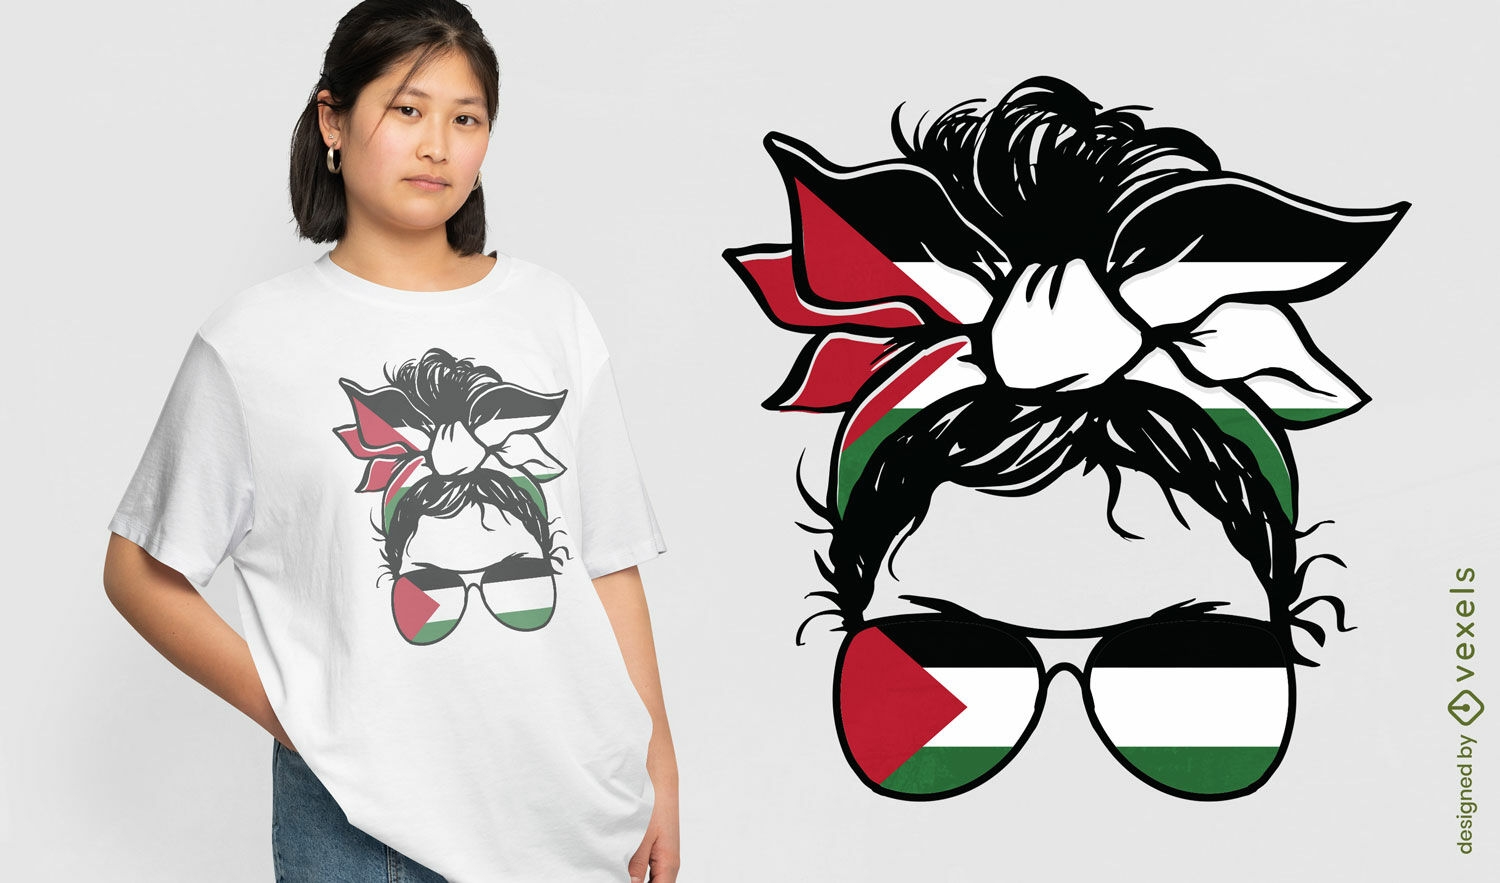 Palestinian flag accessories t-shirt design